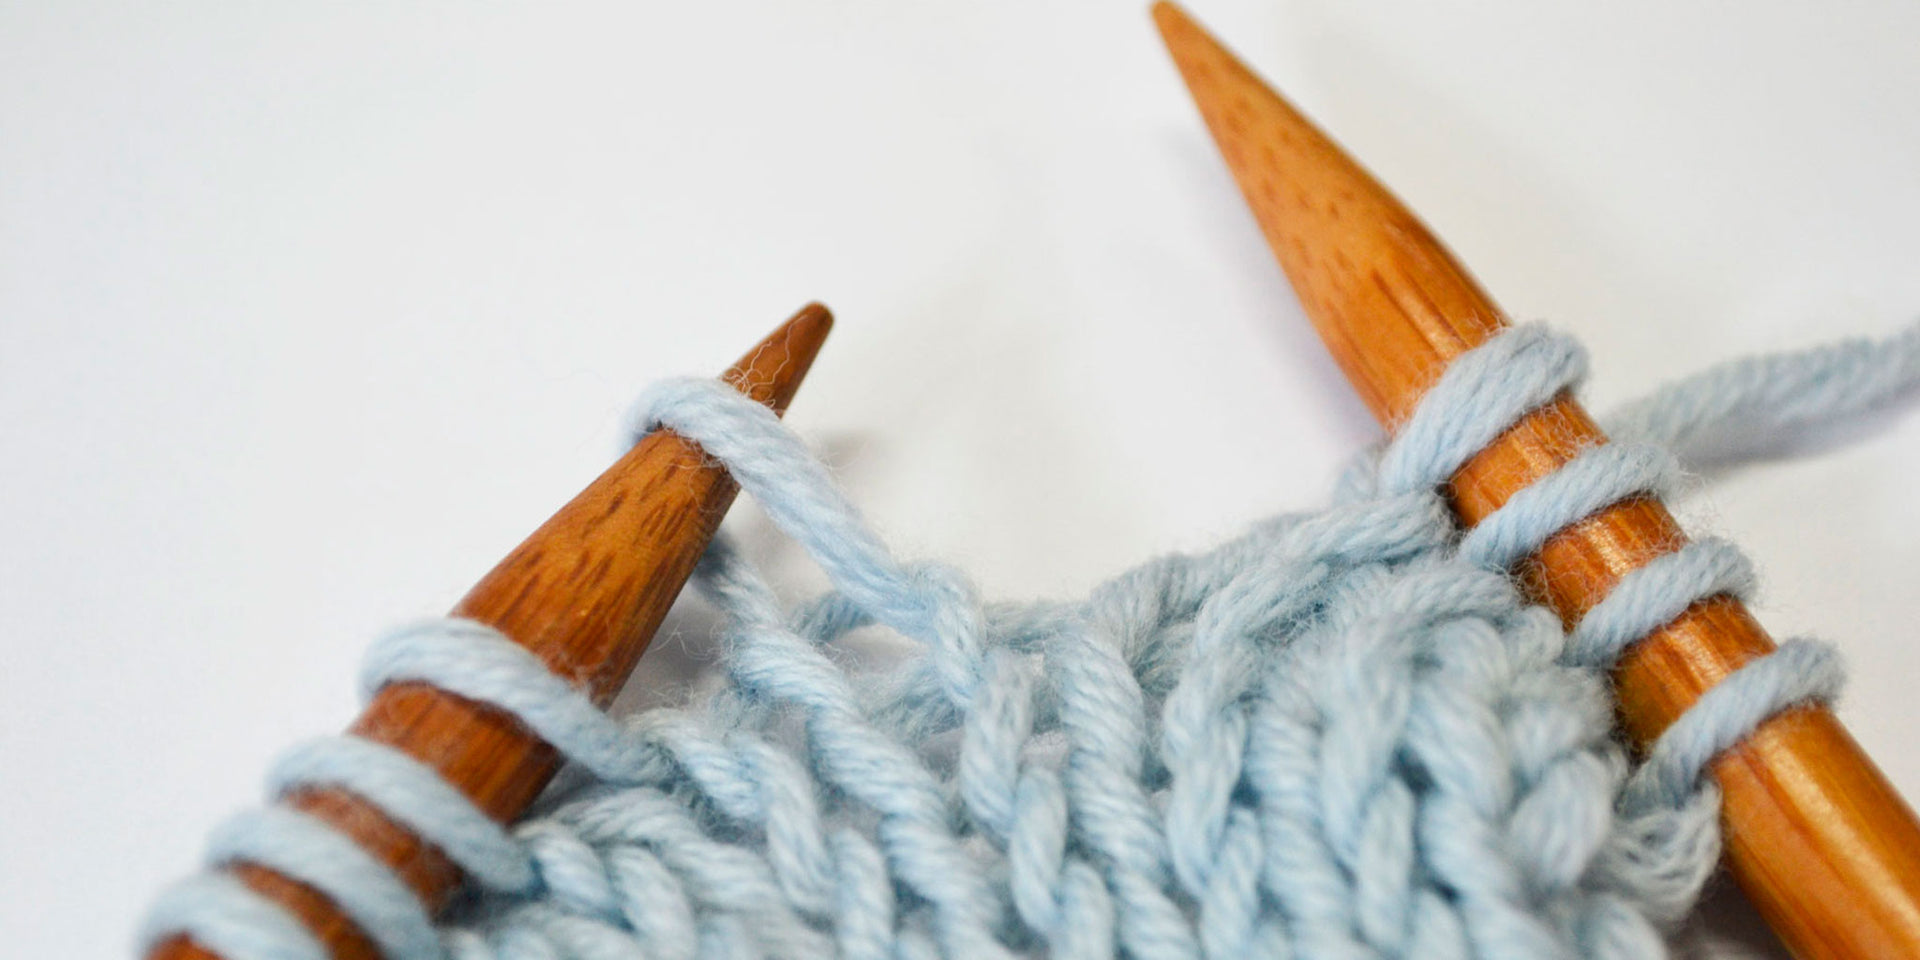 Video: How to Crochet the Knit Stitch (Waistcoat Stitch)